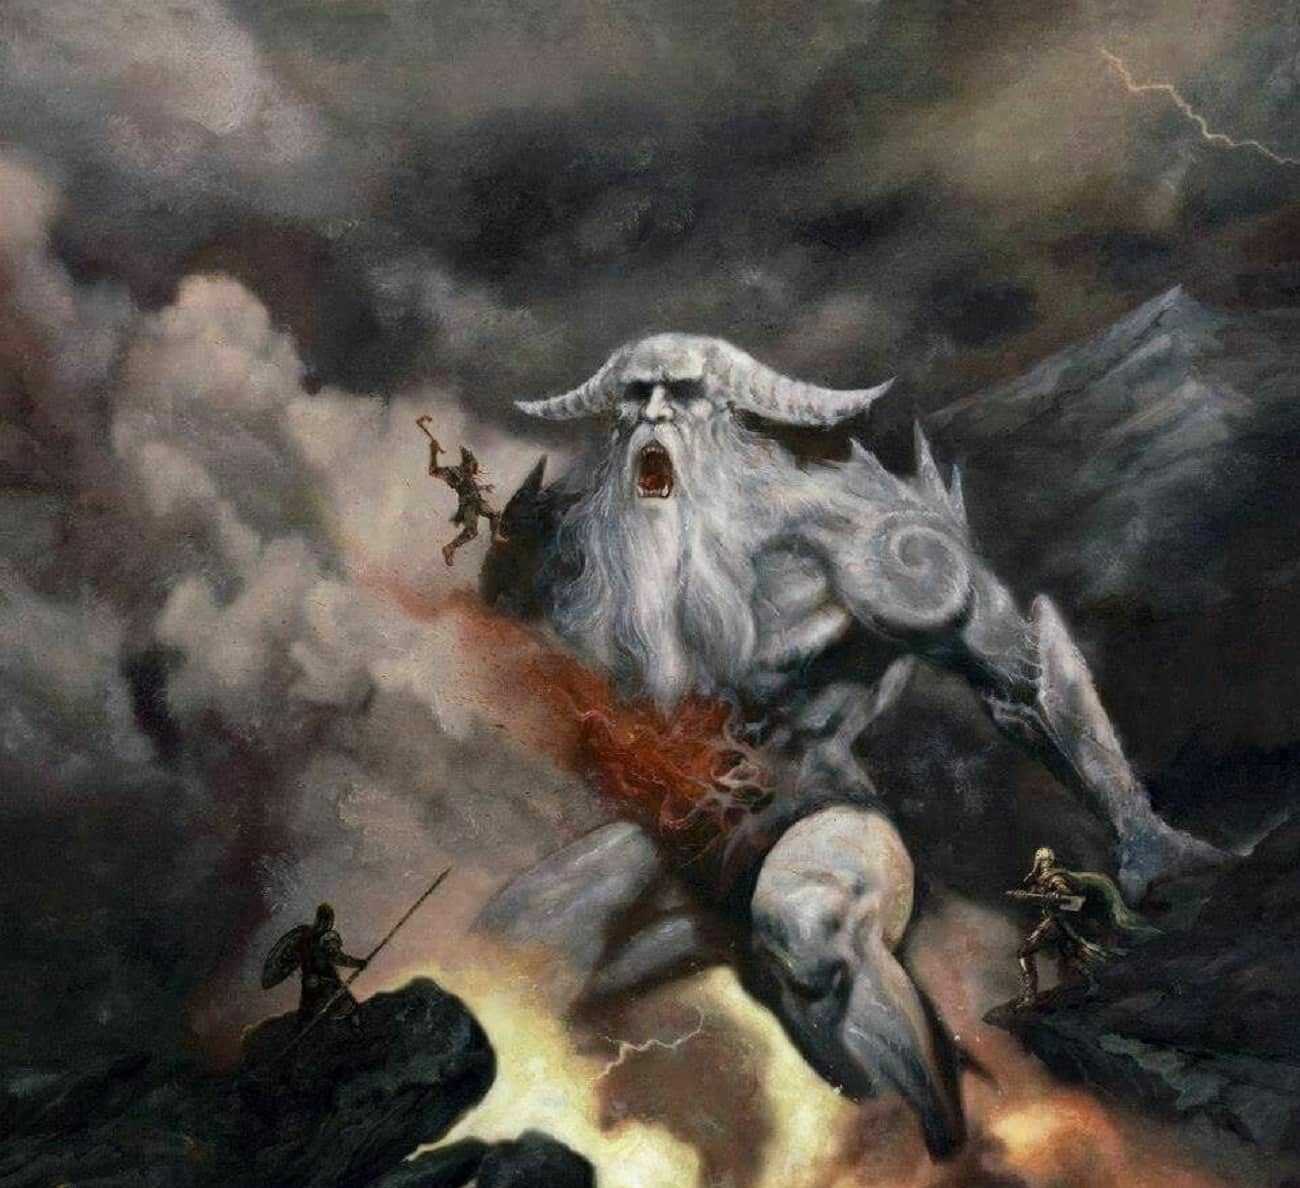 Ymir contra Odin